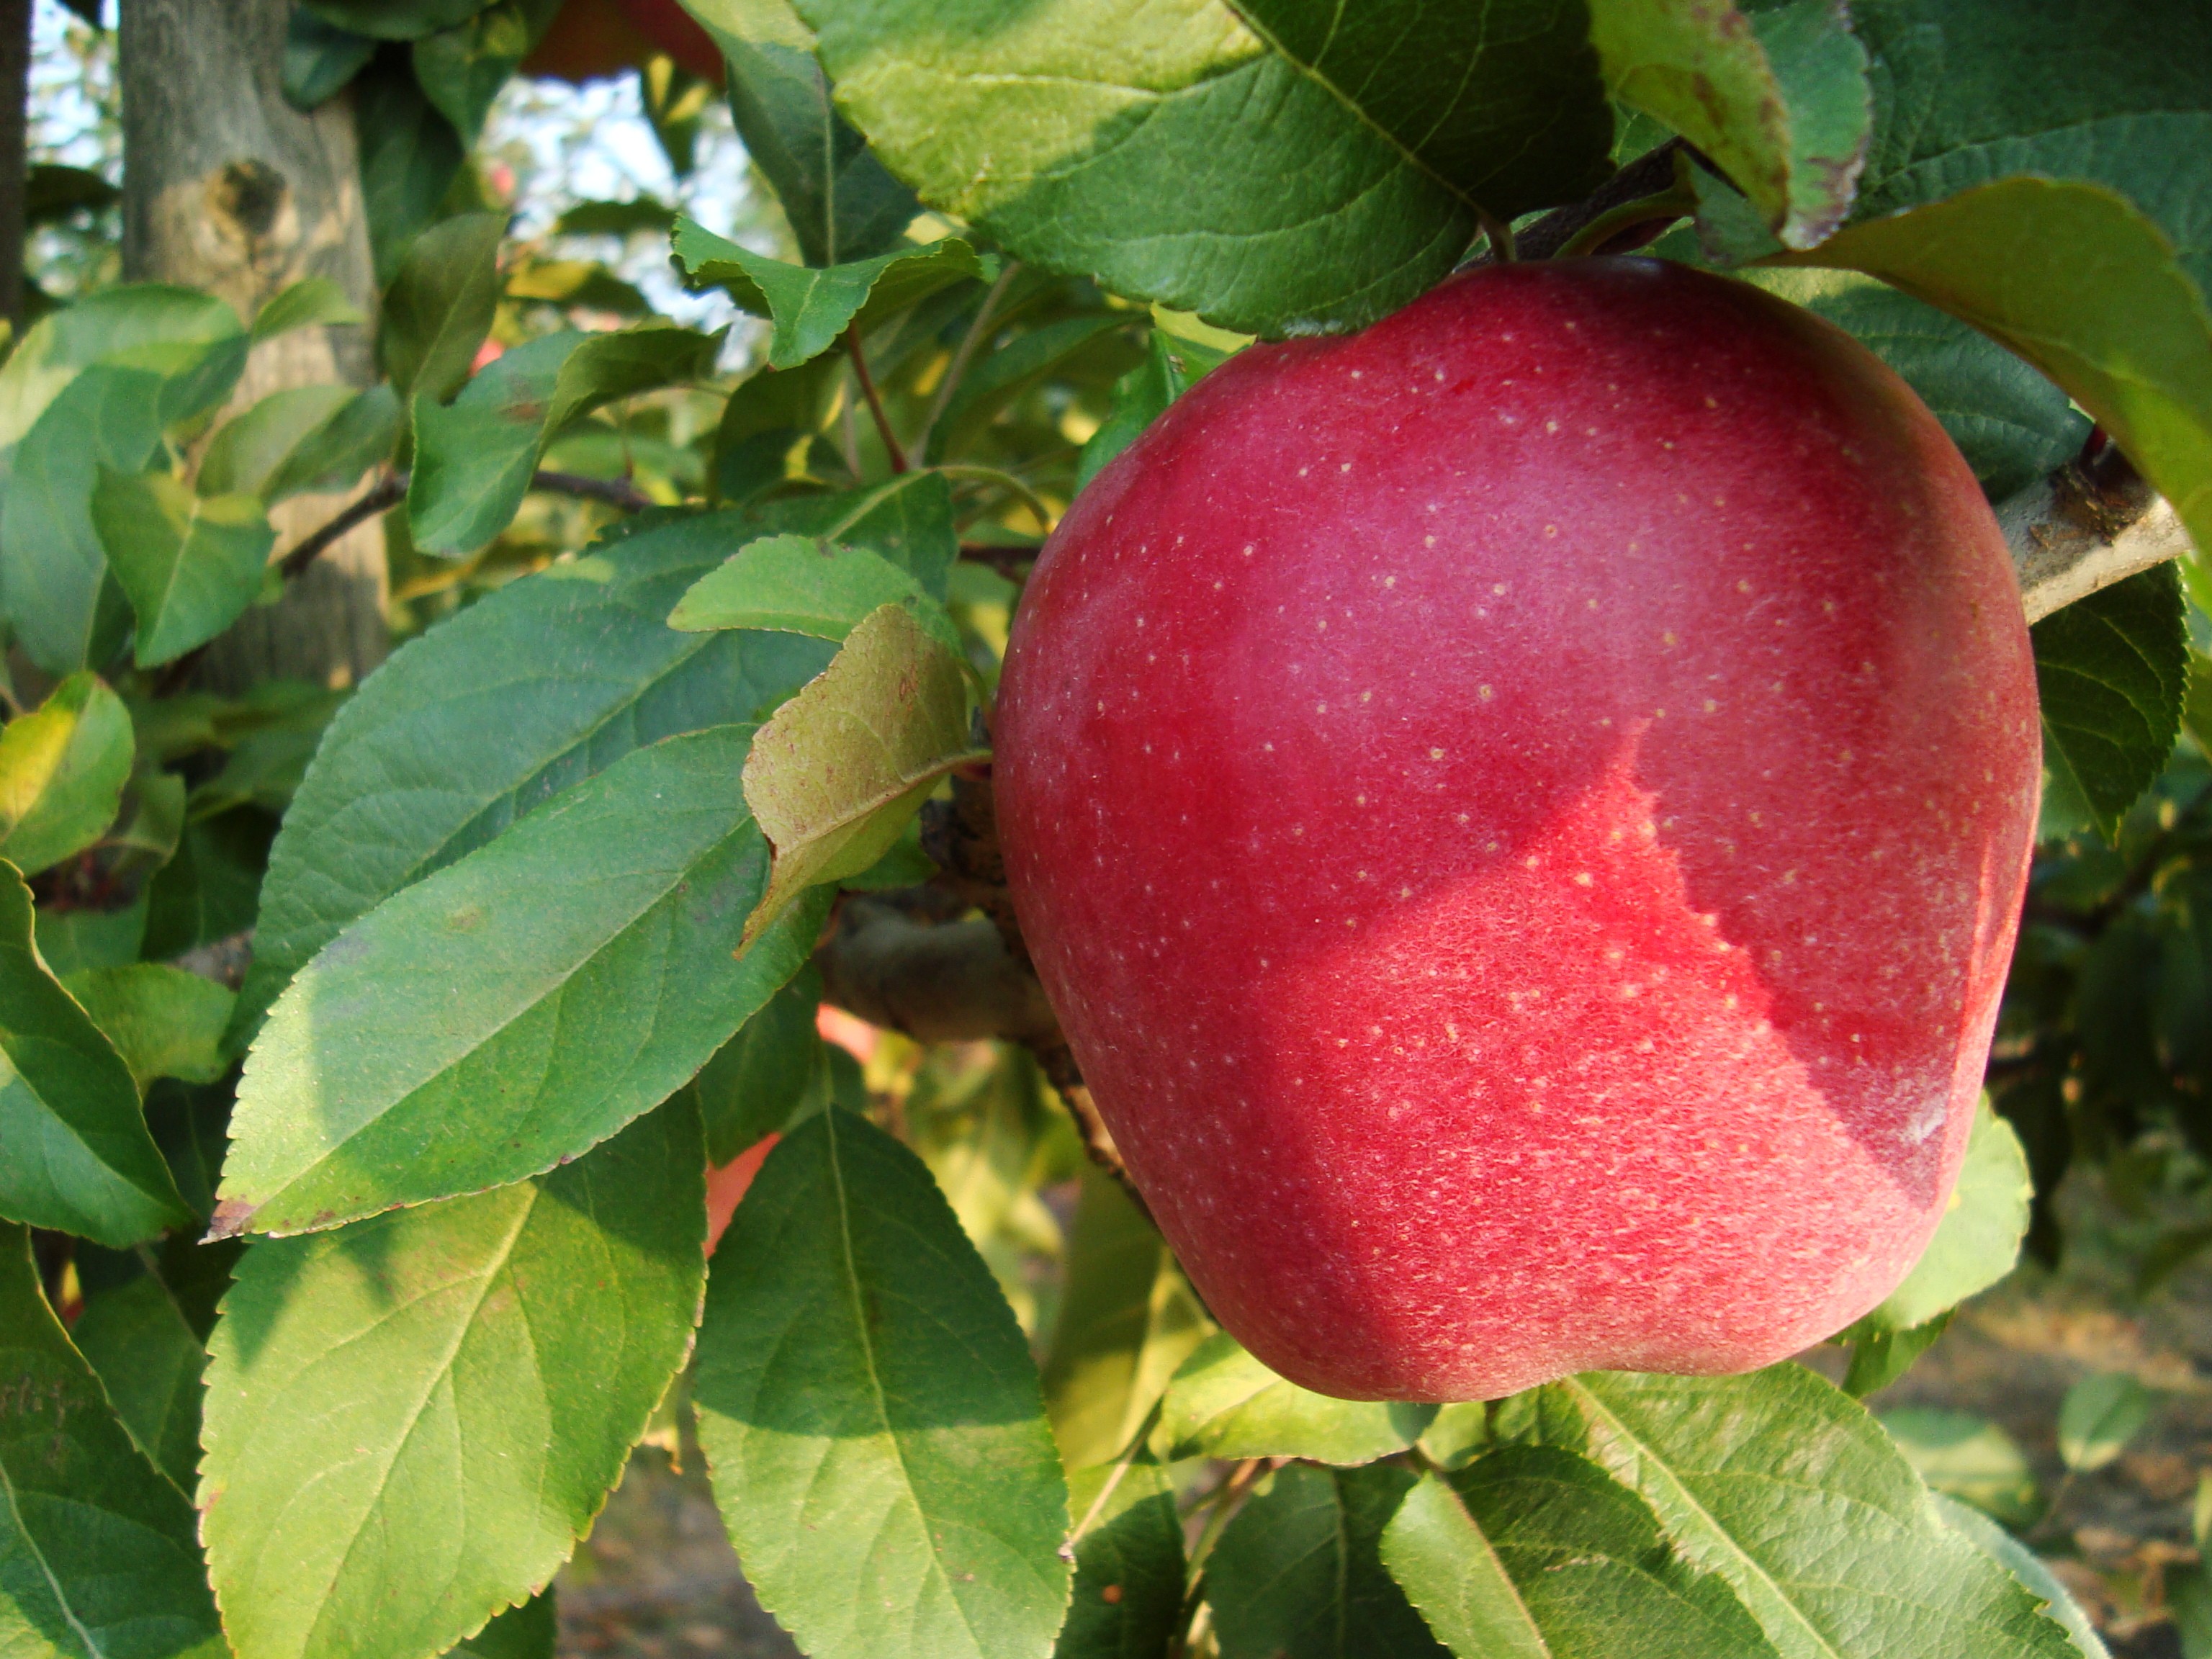 General 3072x2304 apples plants fruit food leaves closeup natural light sunlight depth of field